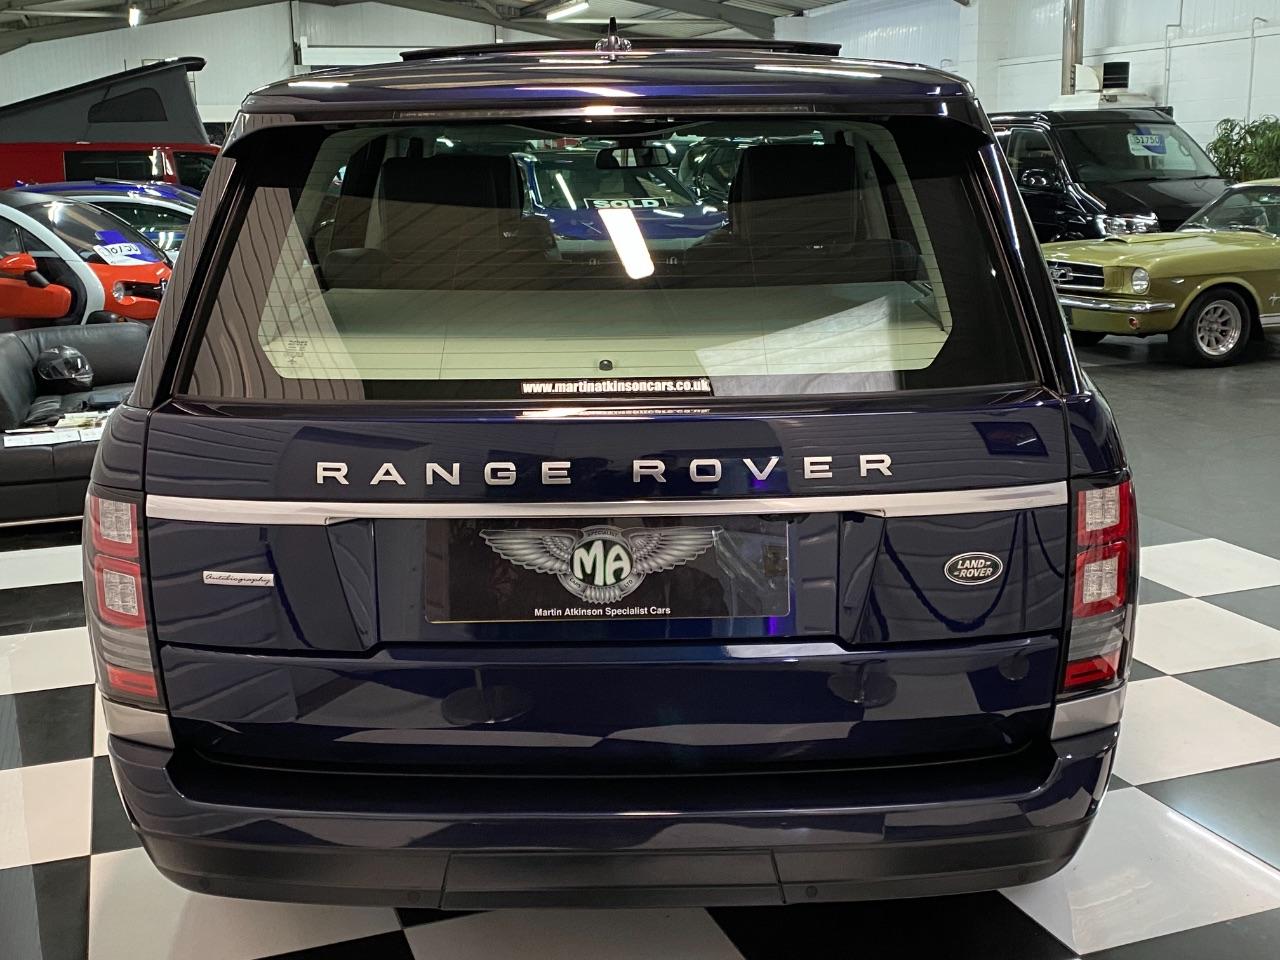 Land Rover Range Rover 5.0 V8 Supercharged Autobiography 4dr Auto [SS] Estate Petrol Loire Blue Metallic